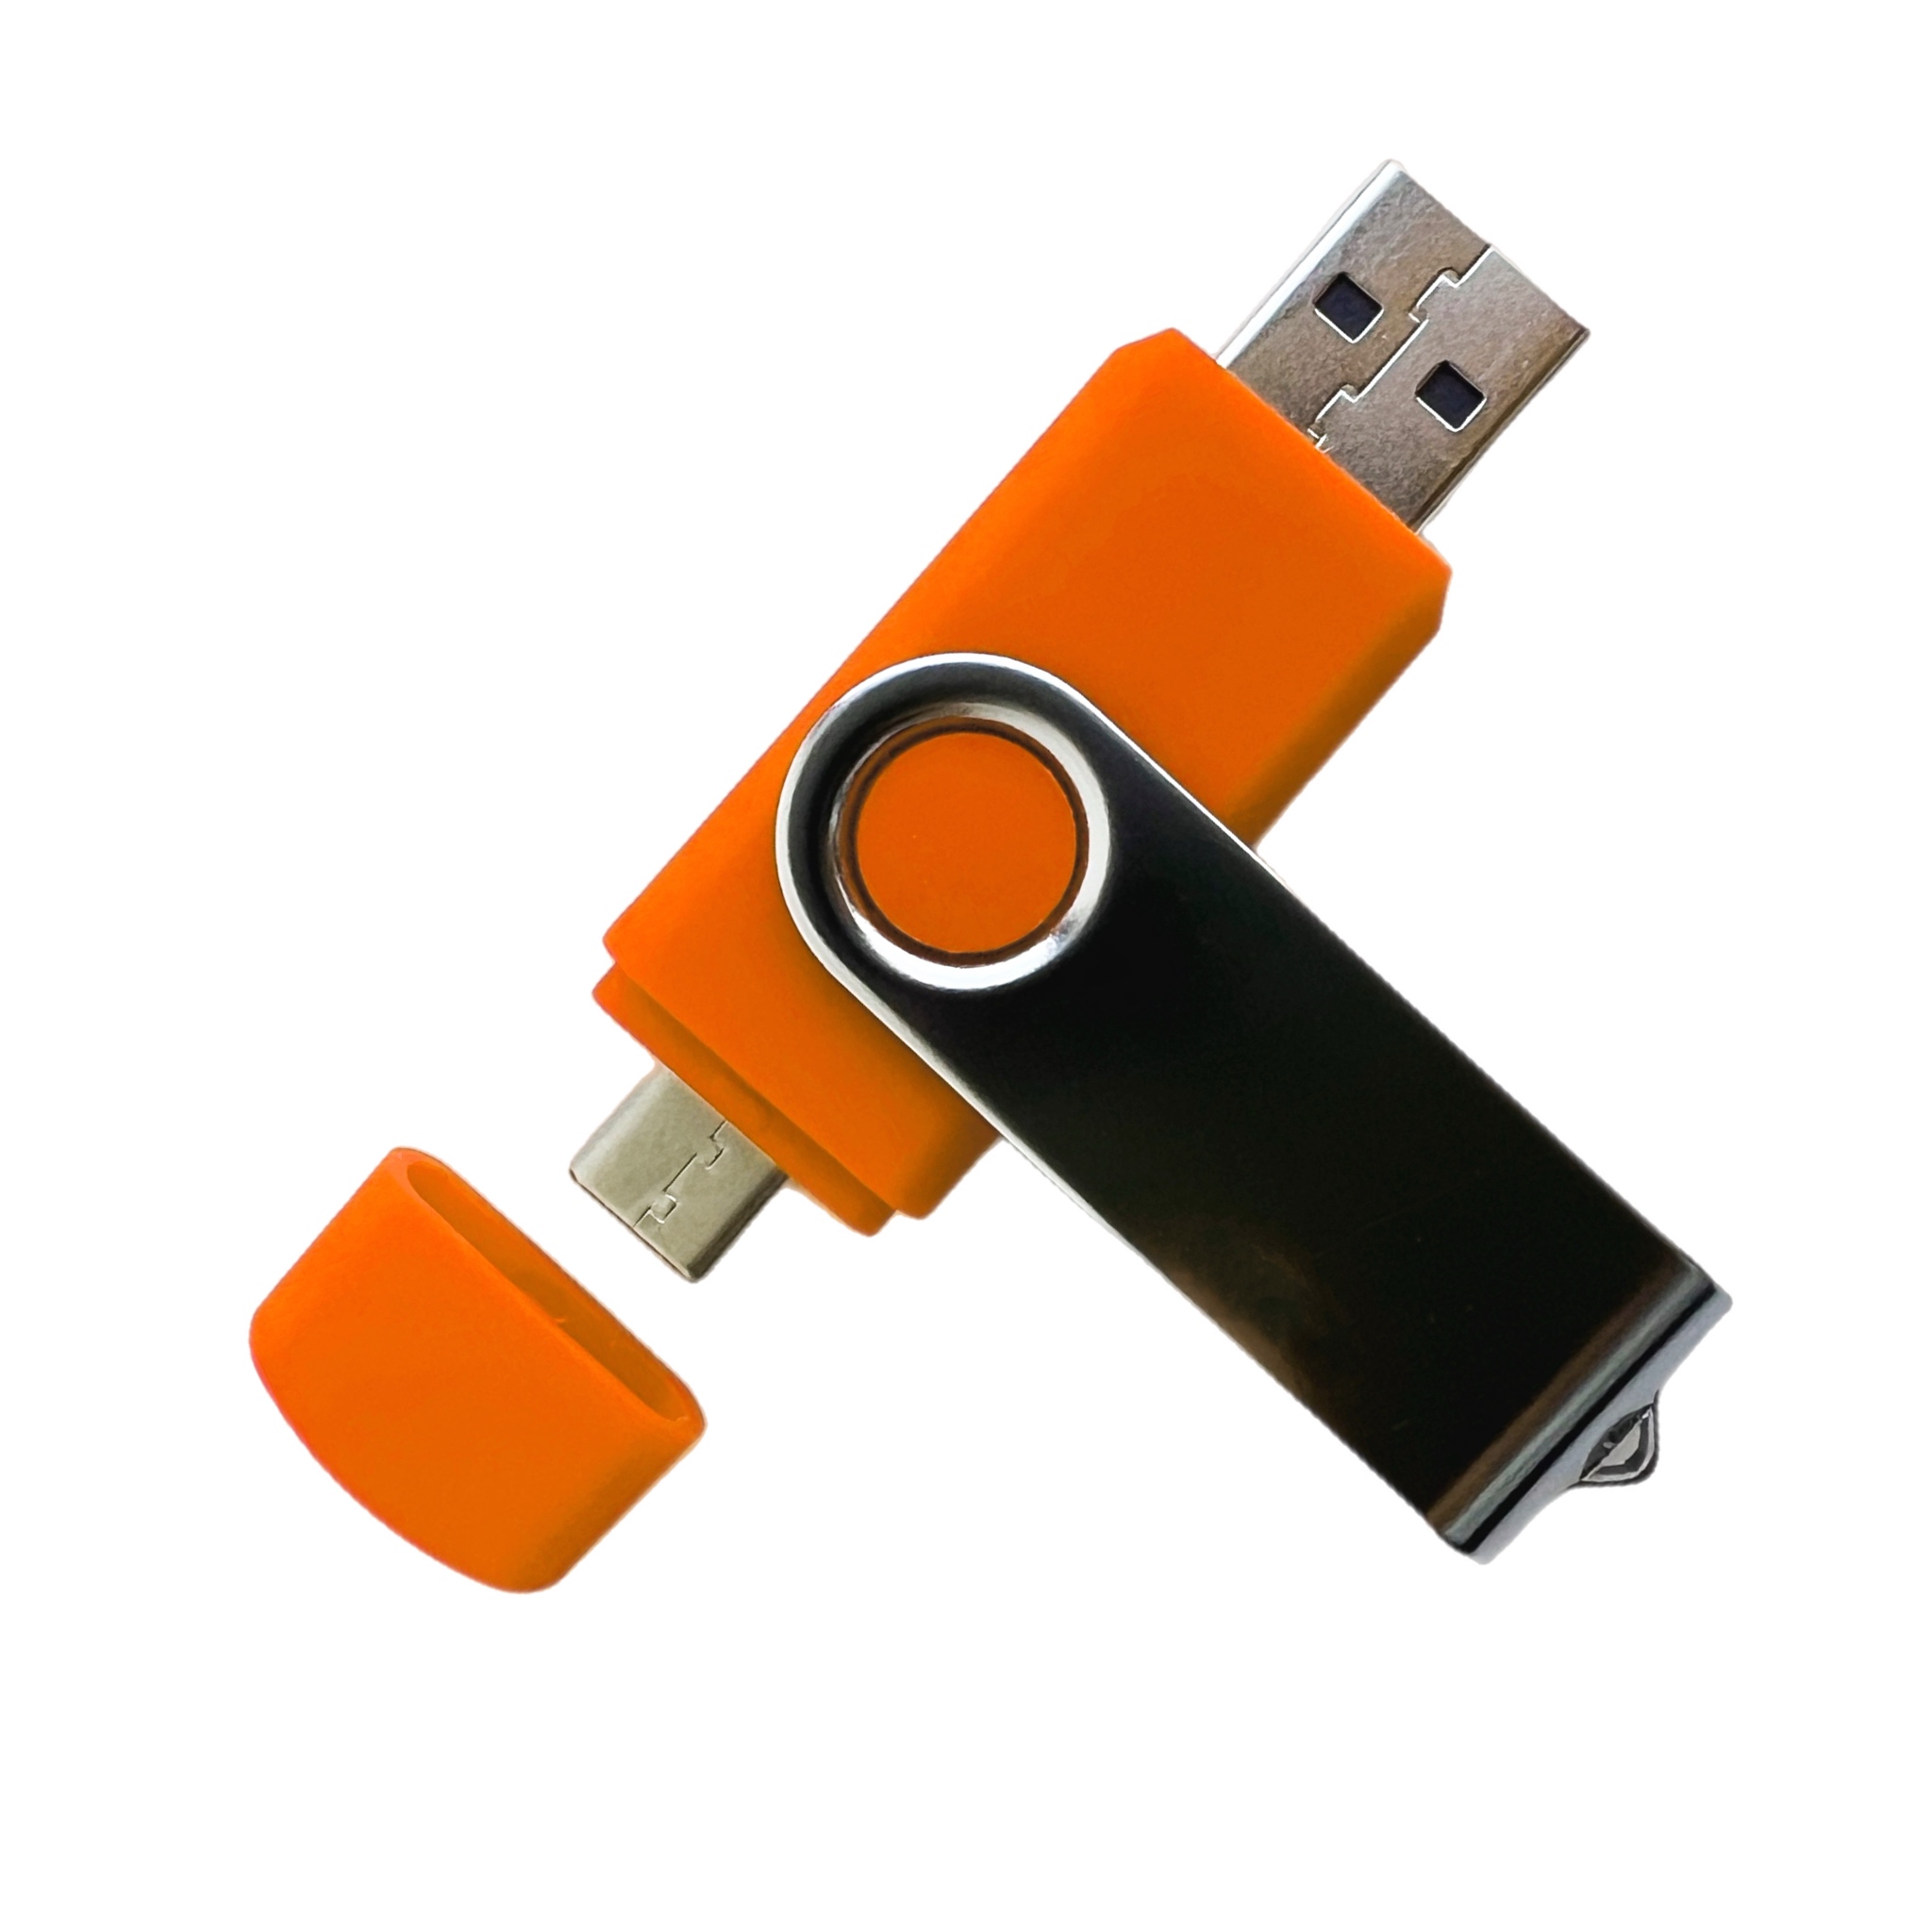 USB-флешка модель 104 OTG Type-C (3.0), объем памяти 32 GB, цвет оранжевый